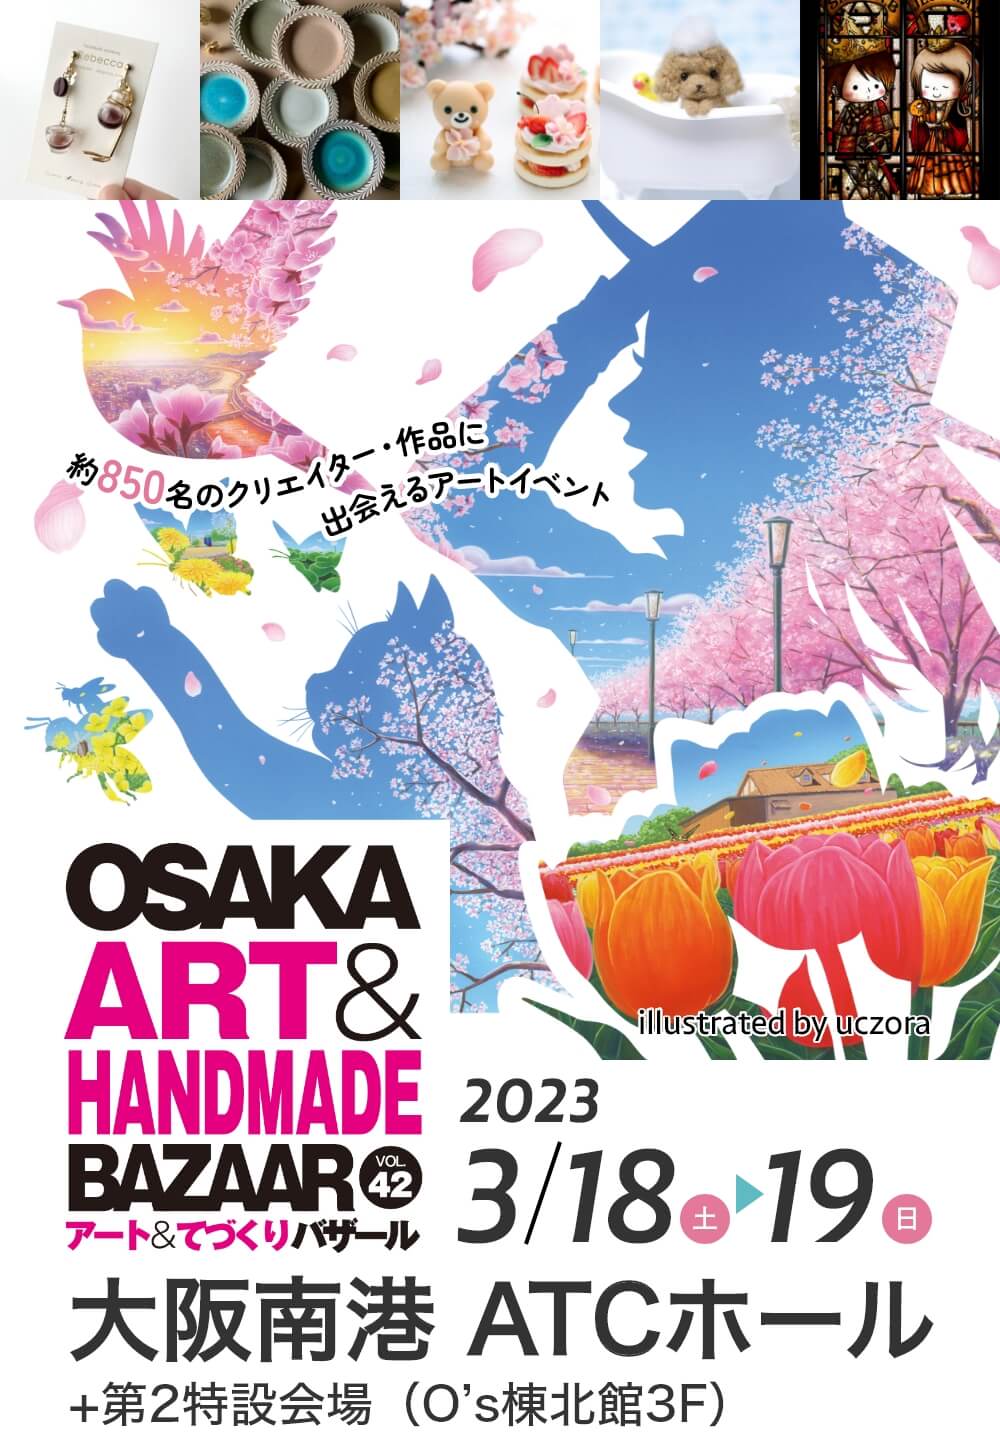 OSAKA ART&HANDMADE BAZAAR VOL.42 アート&てづくりバザール 2023 3/18 19 大阪南港 ATCホール +第2特設会場（O's棟北館3F）